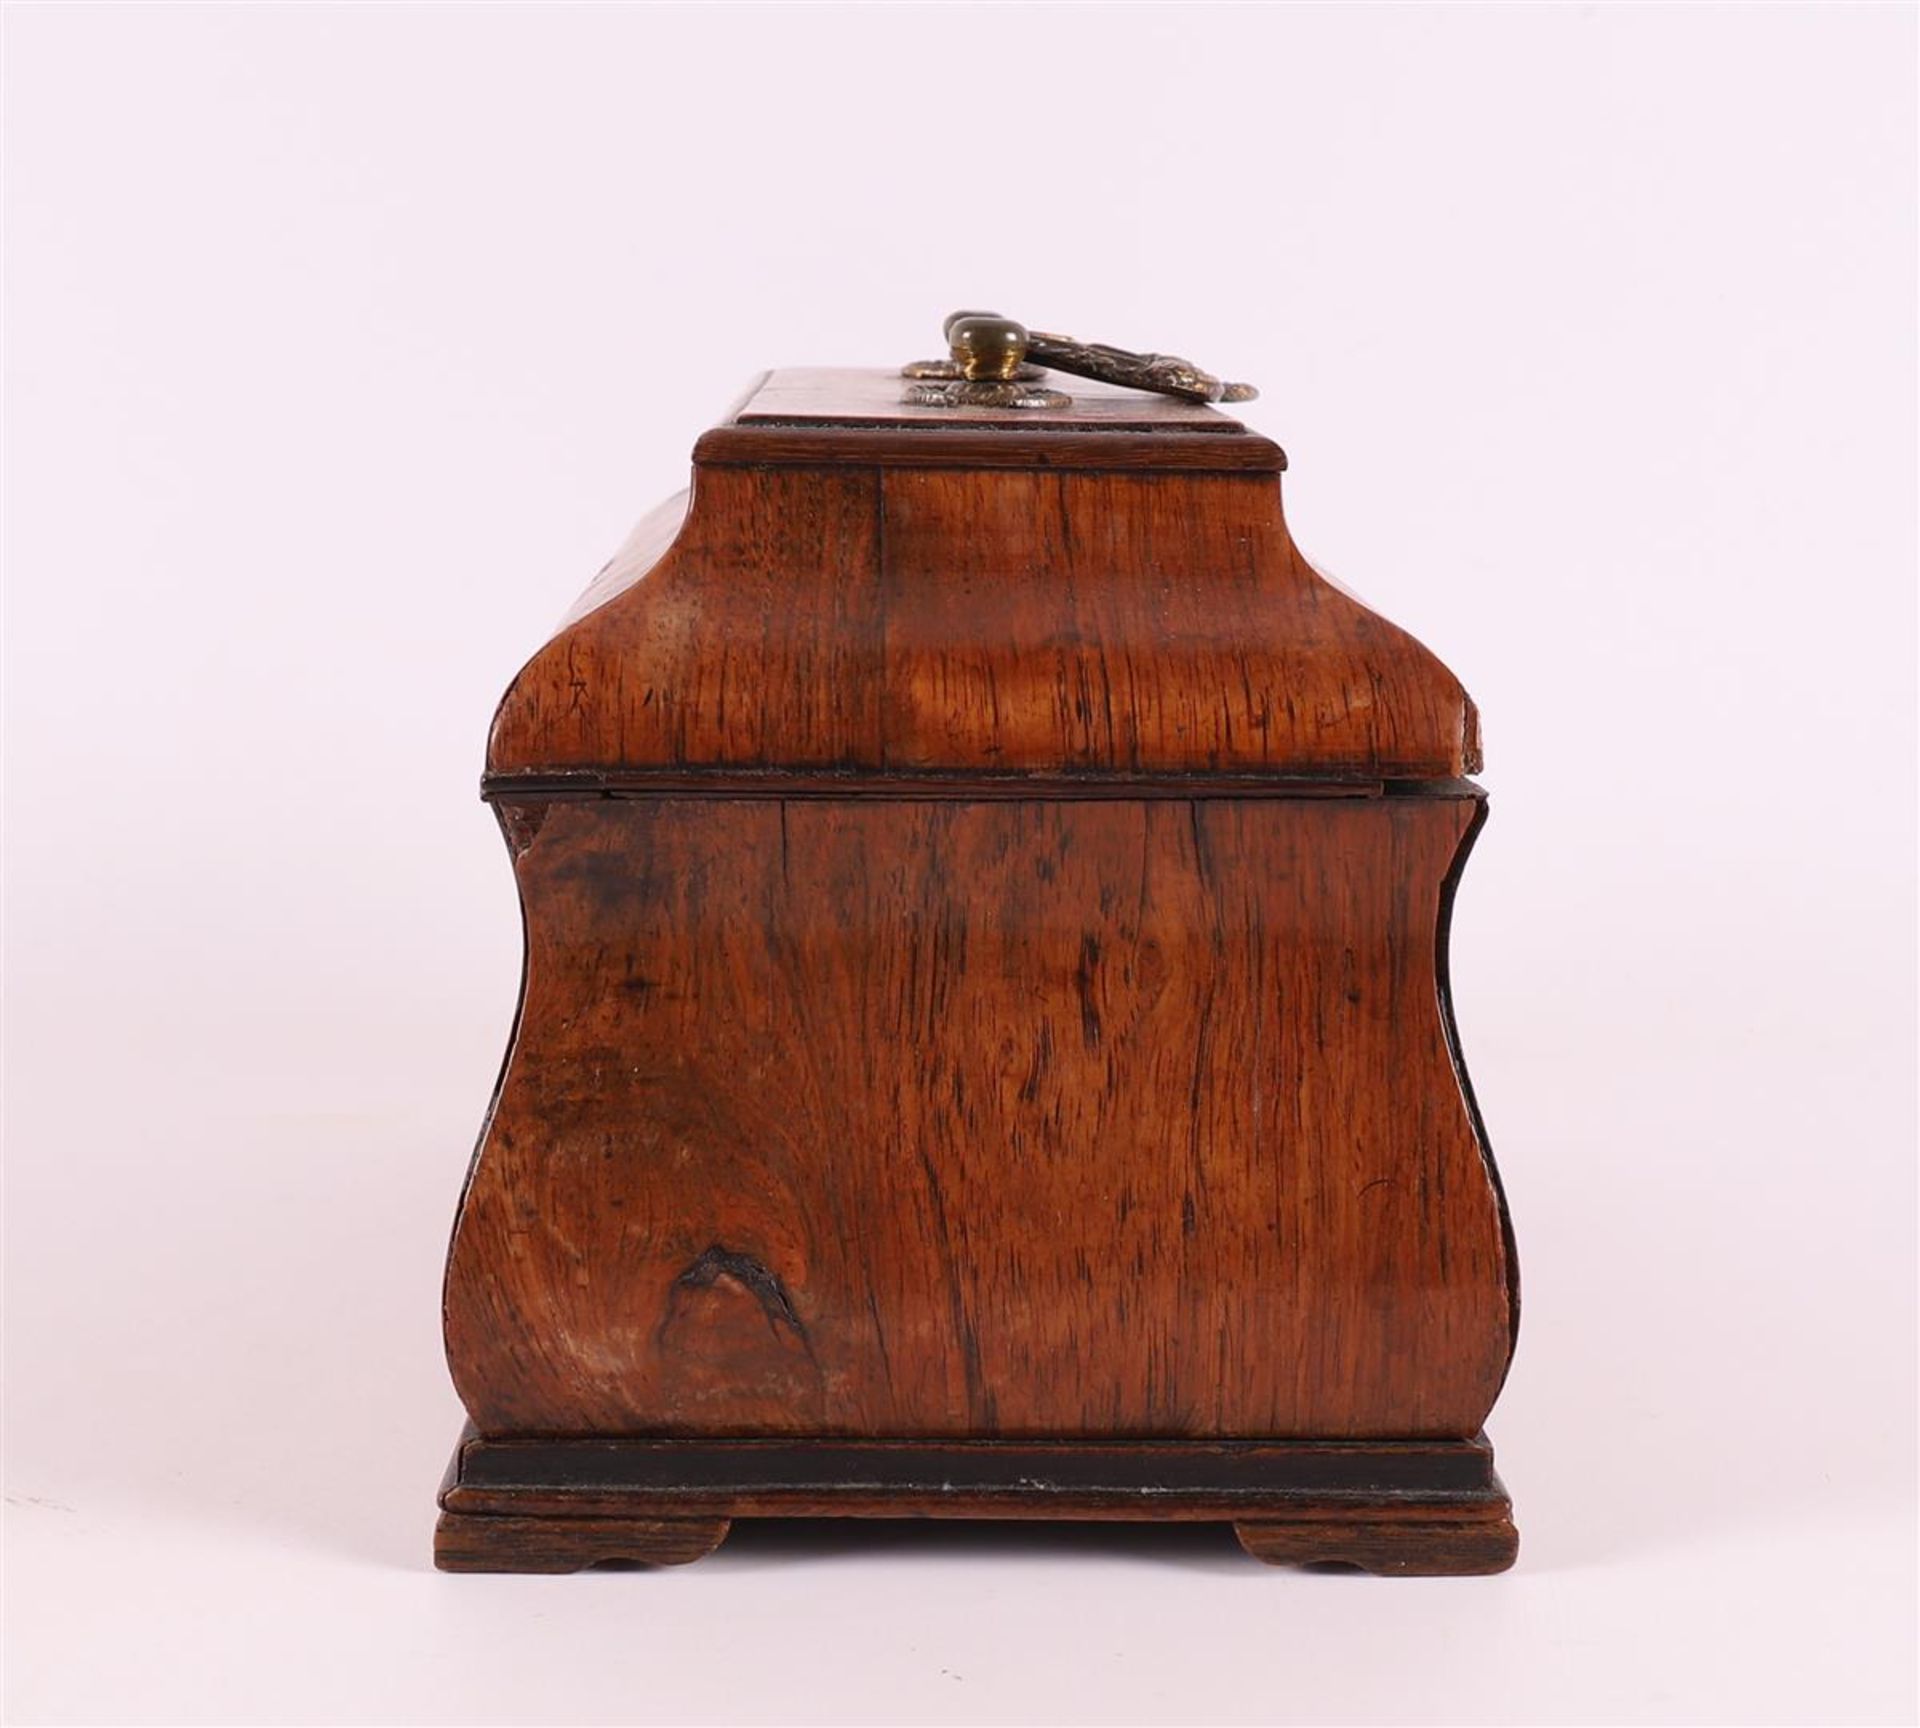 A Dutch rosewood tea box, mid 18th century, h 14 x l 20 x w 12 cm. - Image 2 of 7